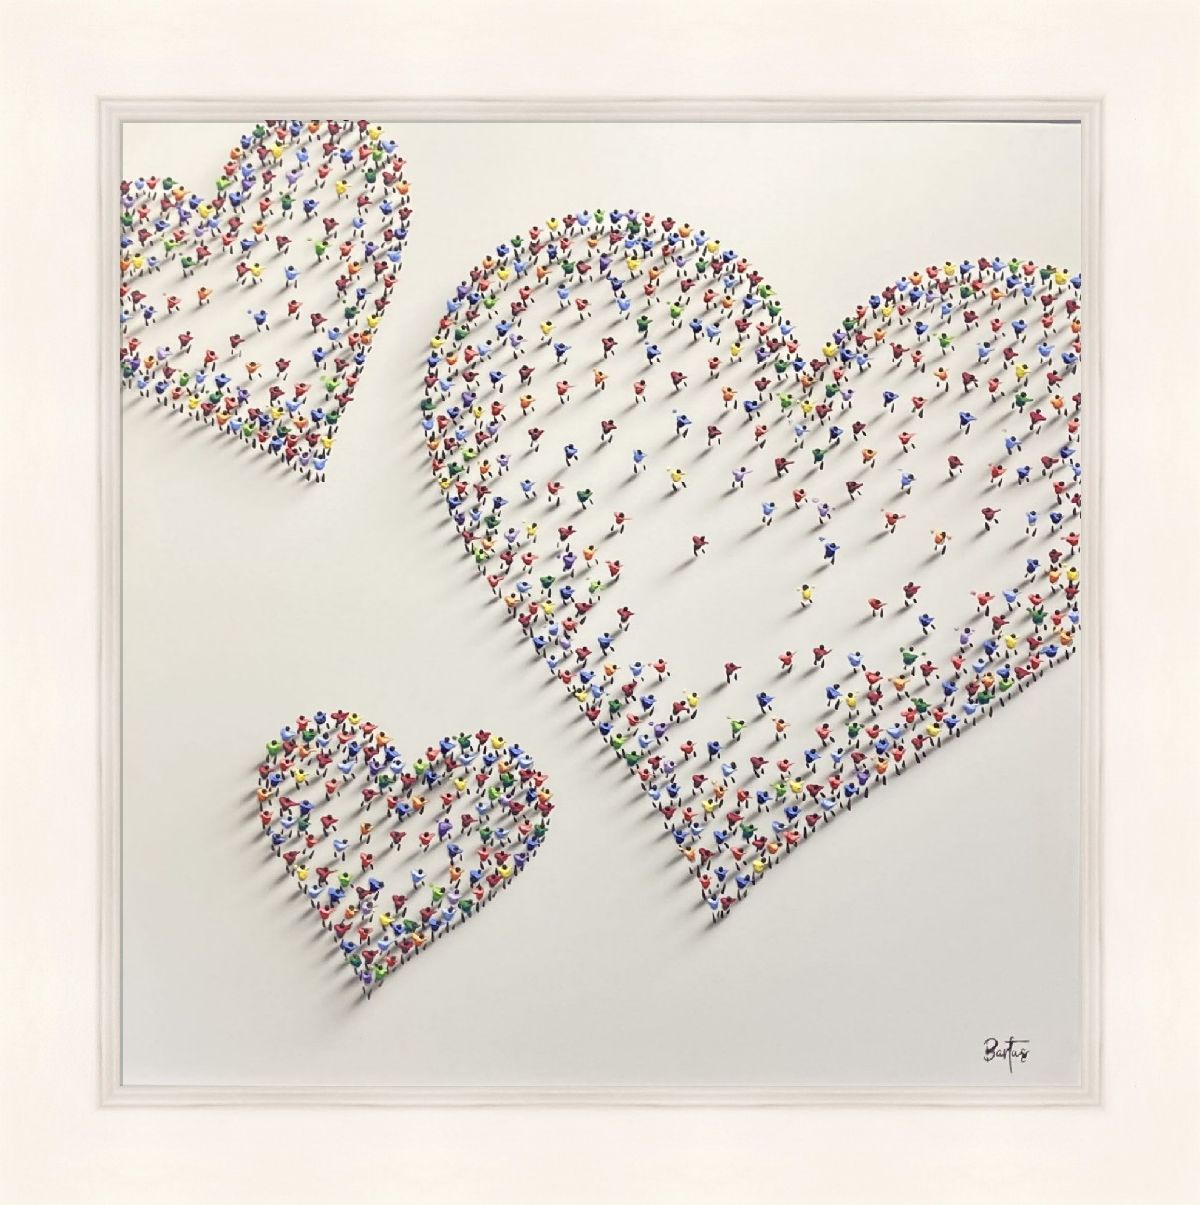 Hearts by Francisco Bartus